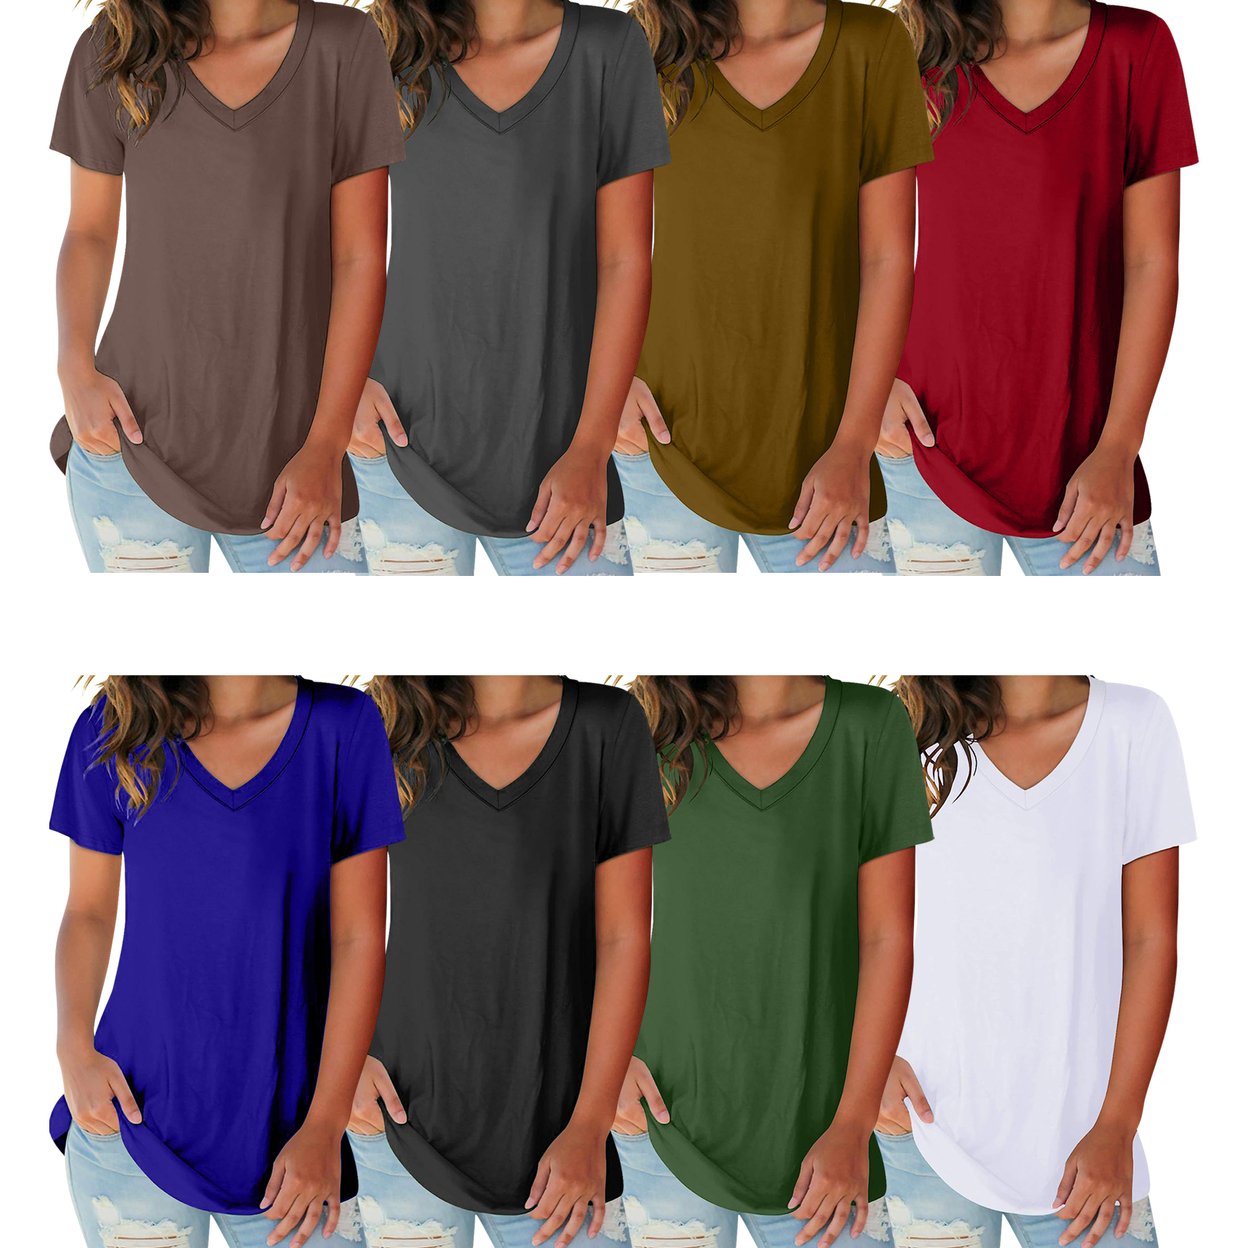 3-Pack: Women's Ultra Soft Smooth Cotton Blend Basic V-Neck Short Sleeve Shirts - Black, White, Brown, Xx-large